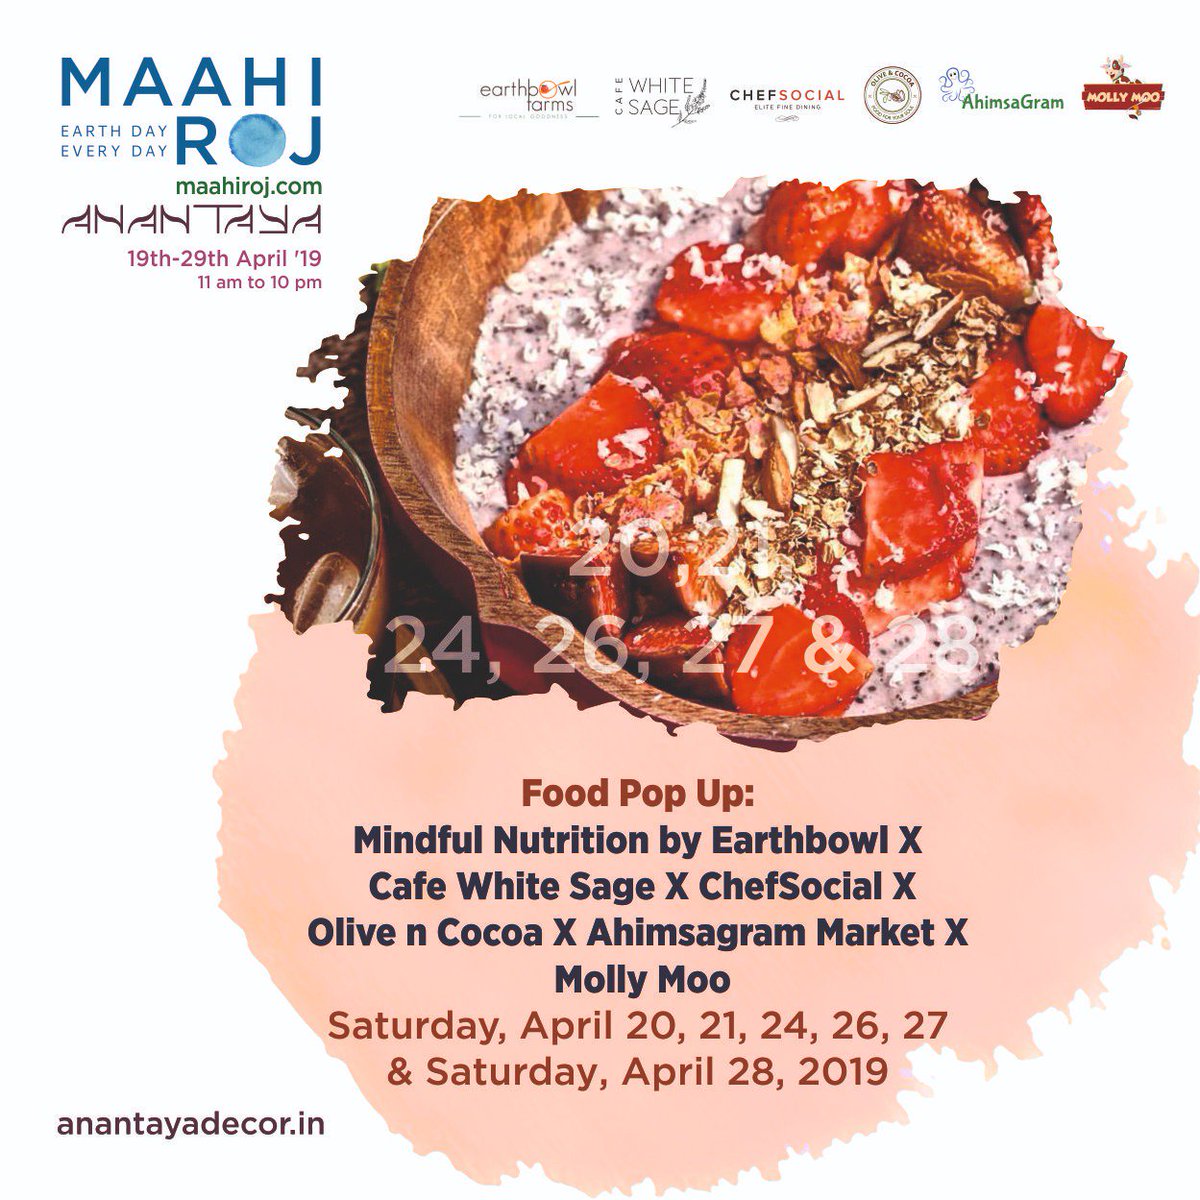 #Food Pop Up at MaahiRoj 2019.
#OliveandCocoa
Mindful Nutrition by #EarthbowlFarms
#CafeWhiteSage 
#ChefSocial
#AhimsaGram Market 
#MollyMooIceCream
.
.
#AnantayaDecor #MaahiRoj2019 #FoodAtMaahiRoj #Sustainable #Earthday